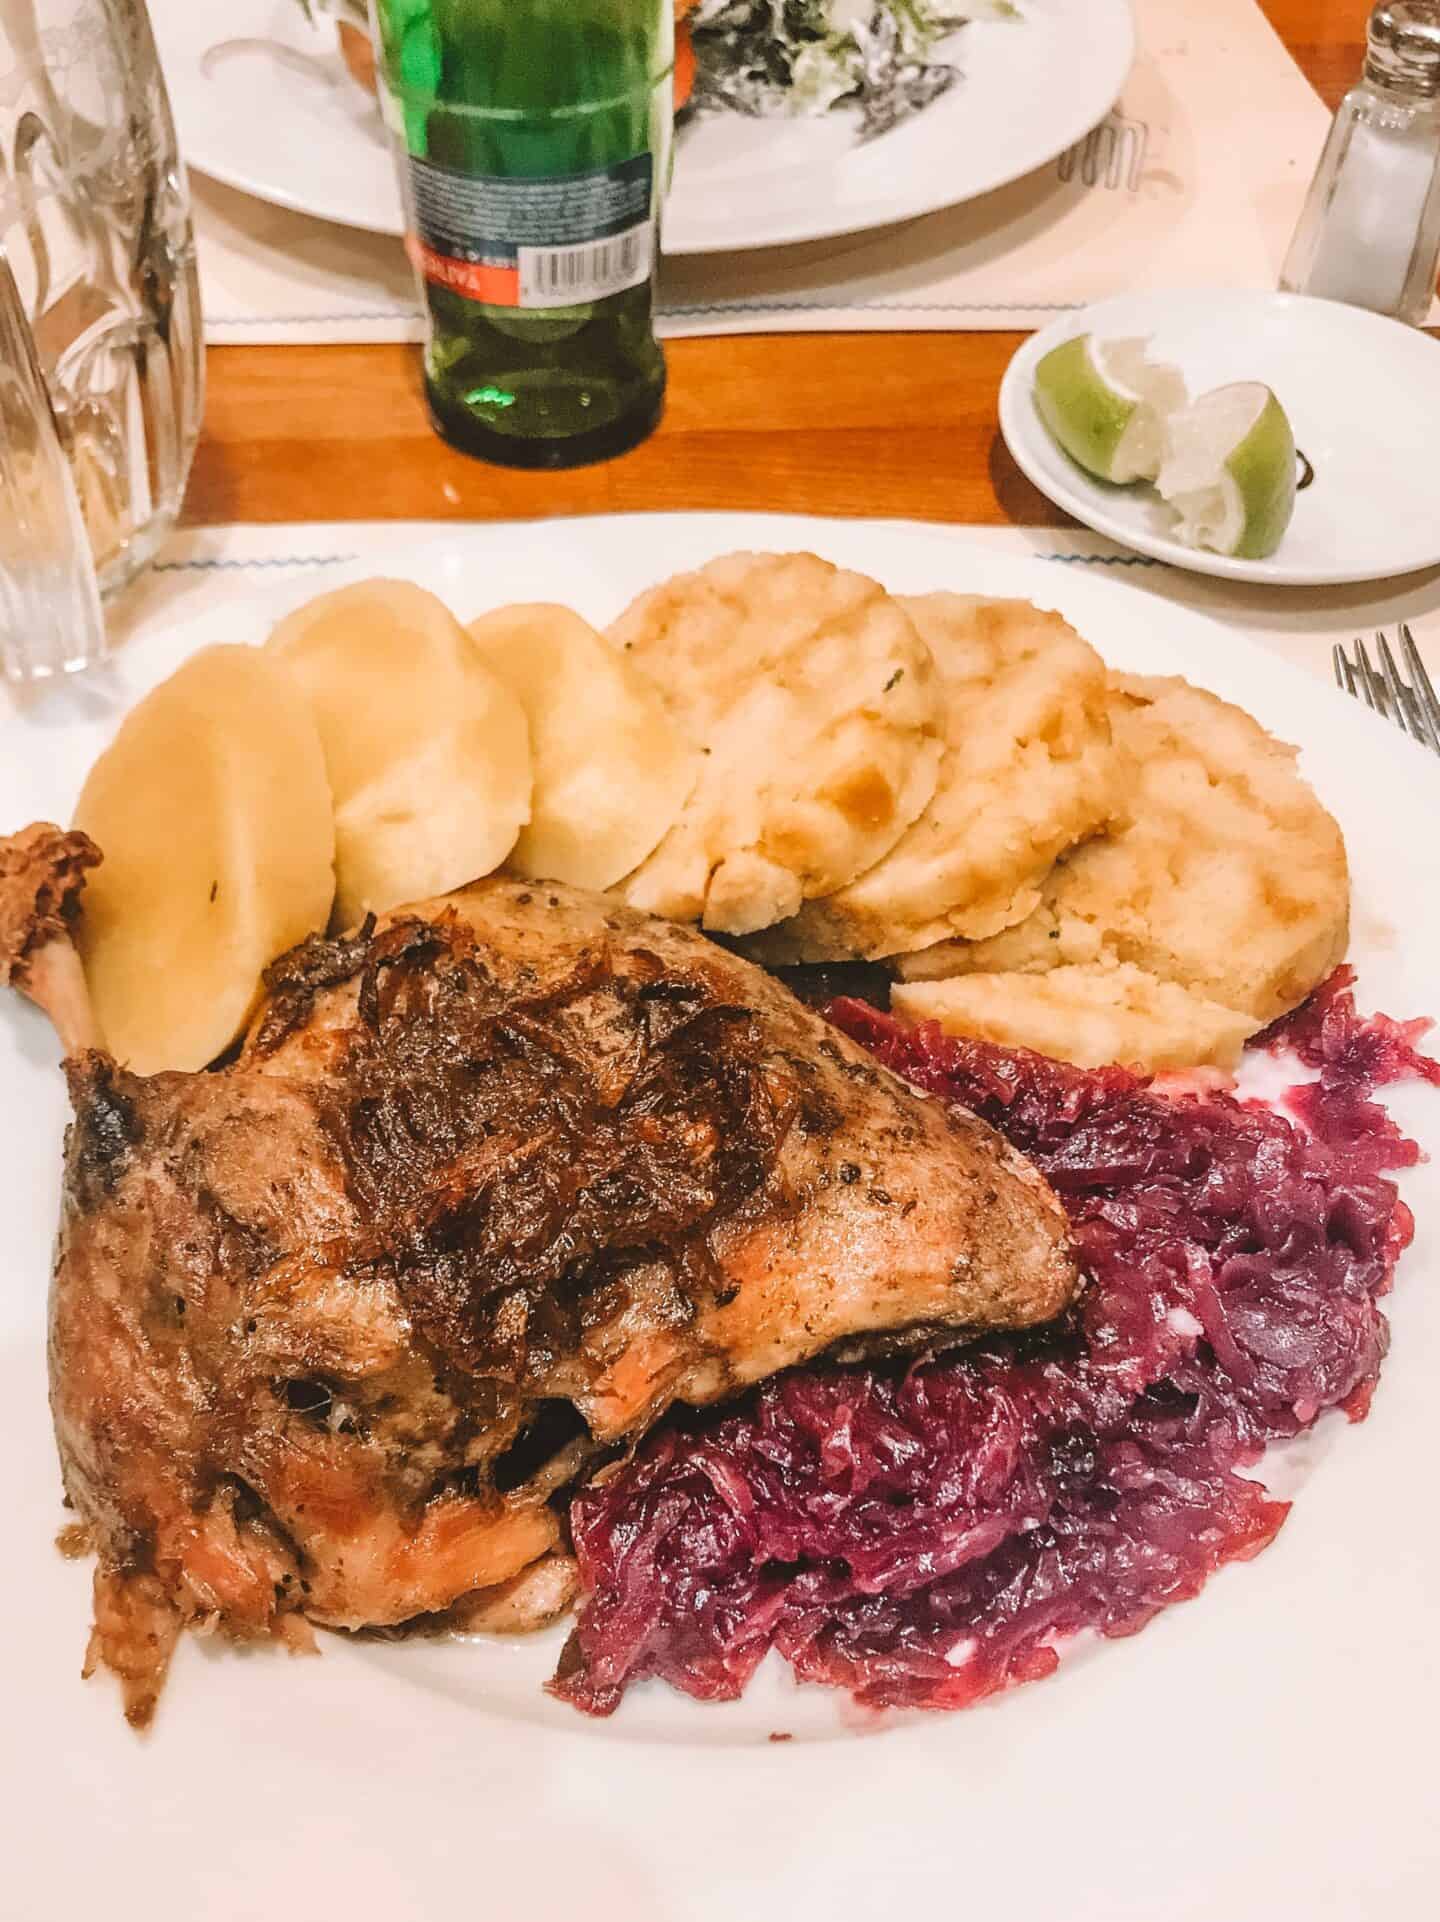 A heaping plate of roasted duck, potato pancakes and sauerkraut from U Bulinu Prague.